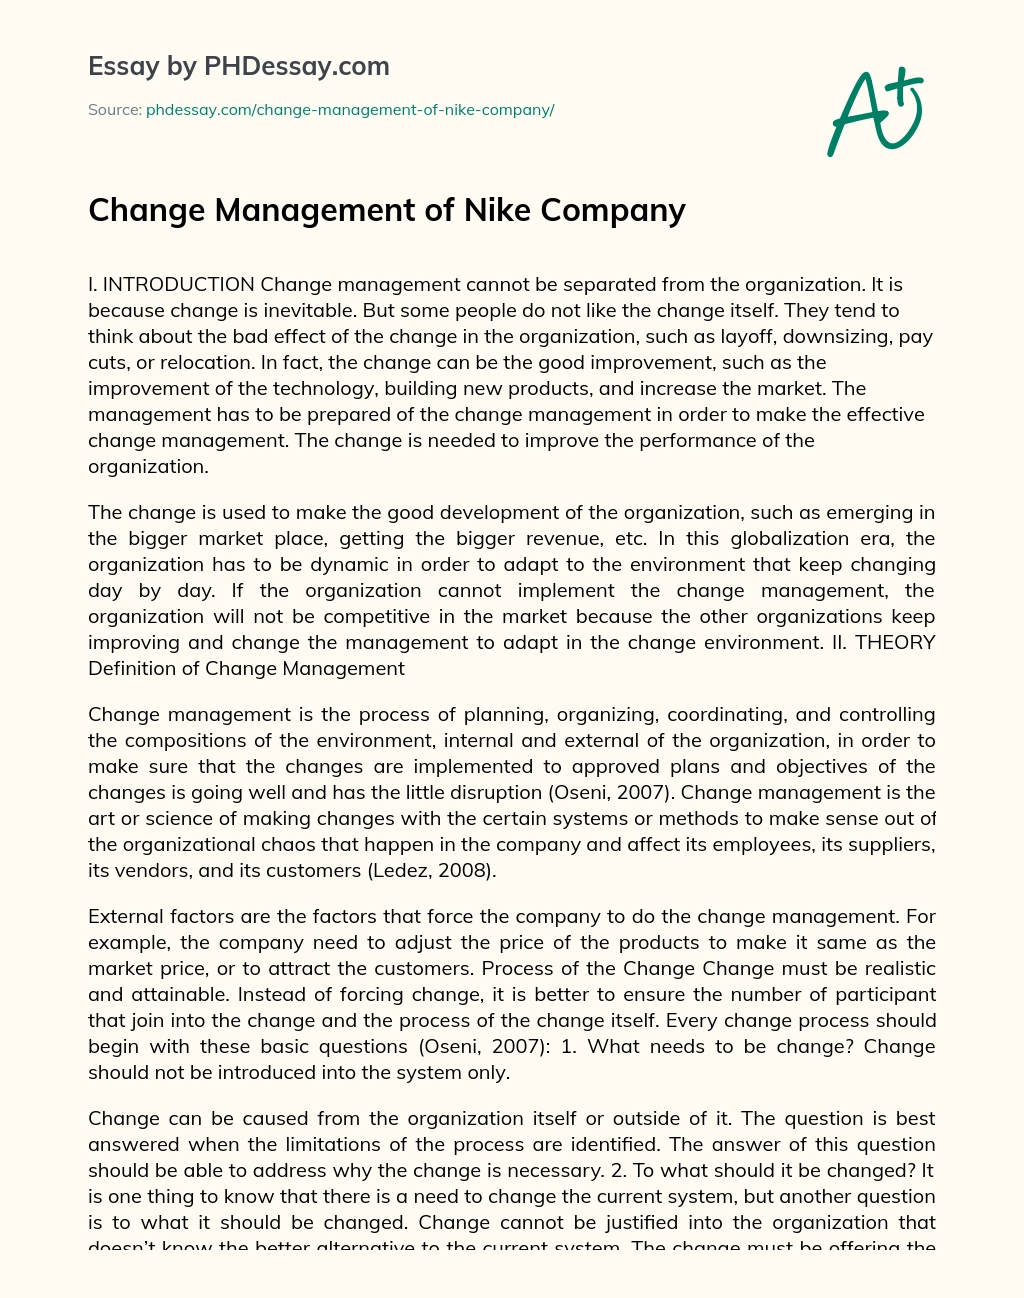 Change Management of Nike Company essay